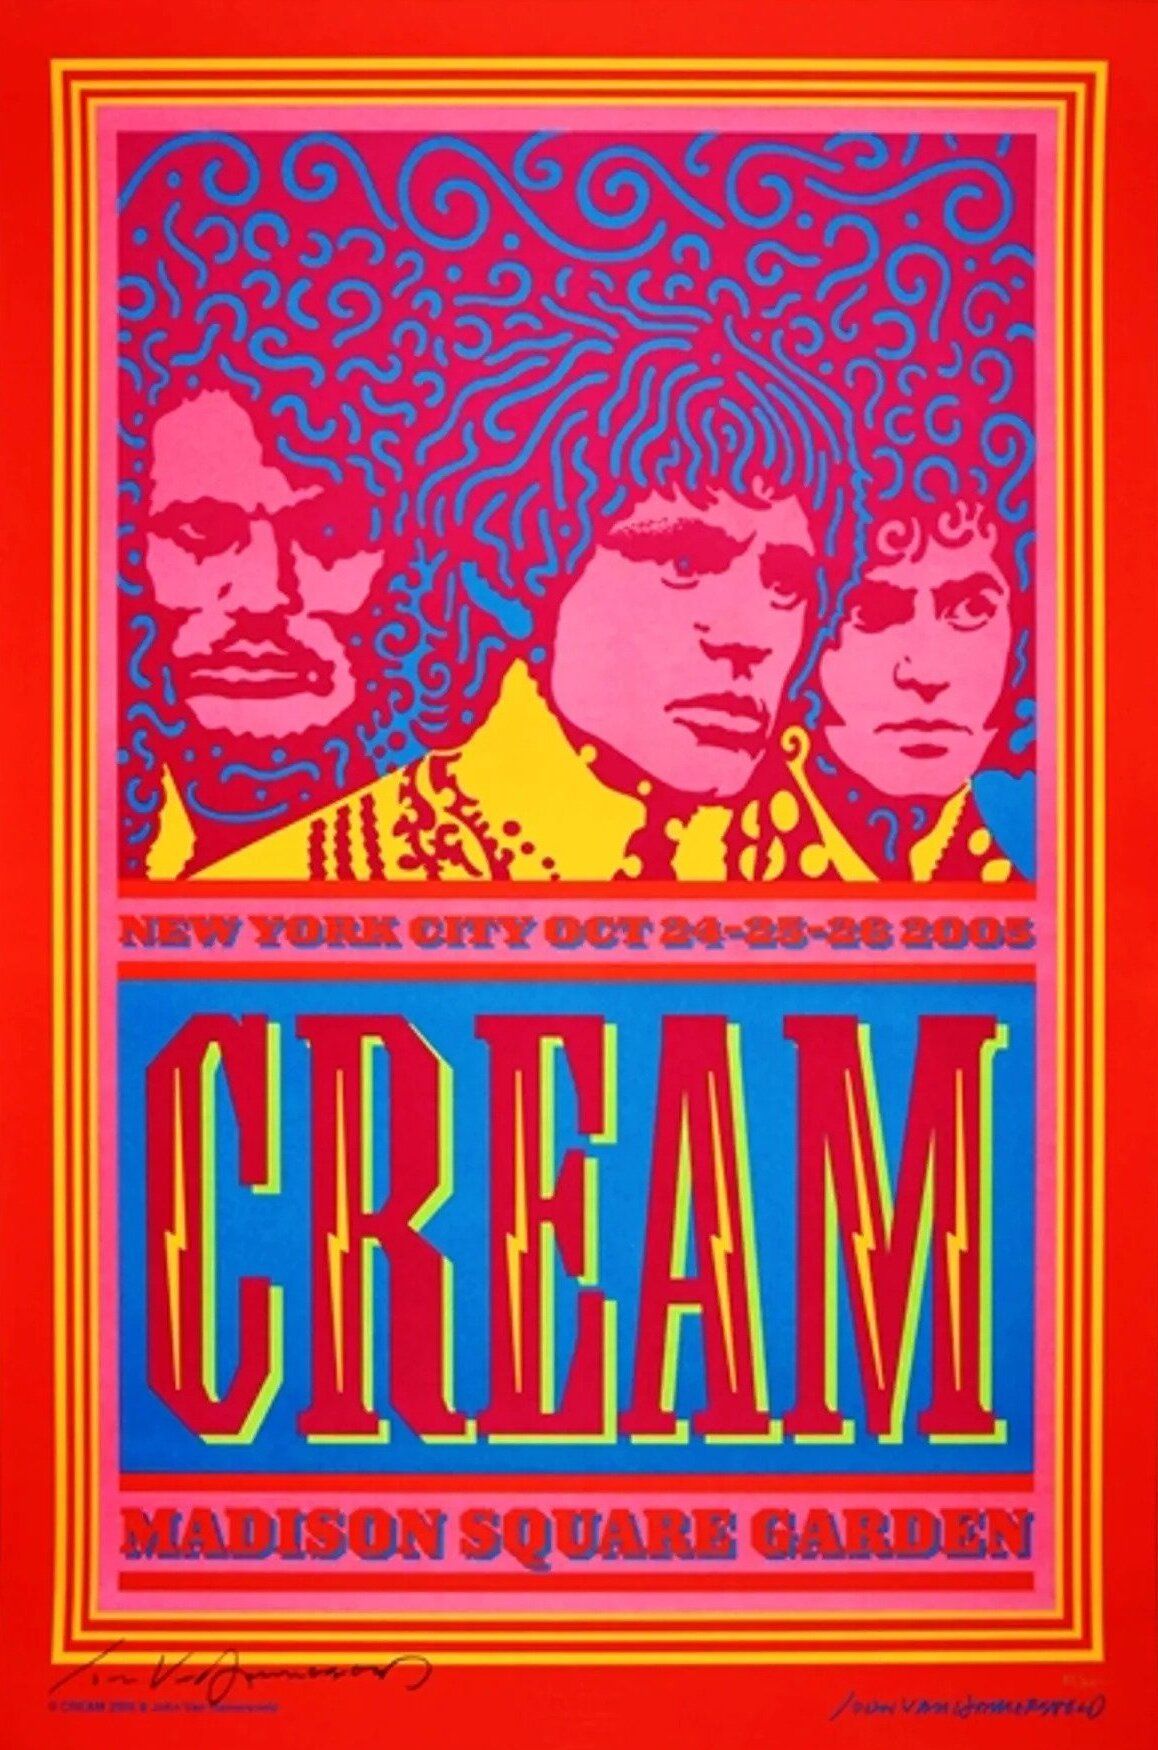 Cream Madison Square Garden 2005 Concert Poster